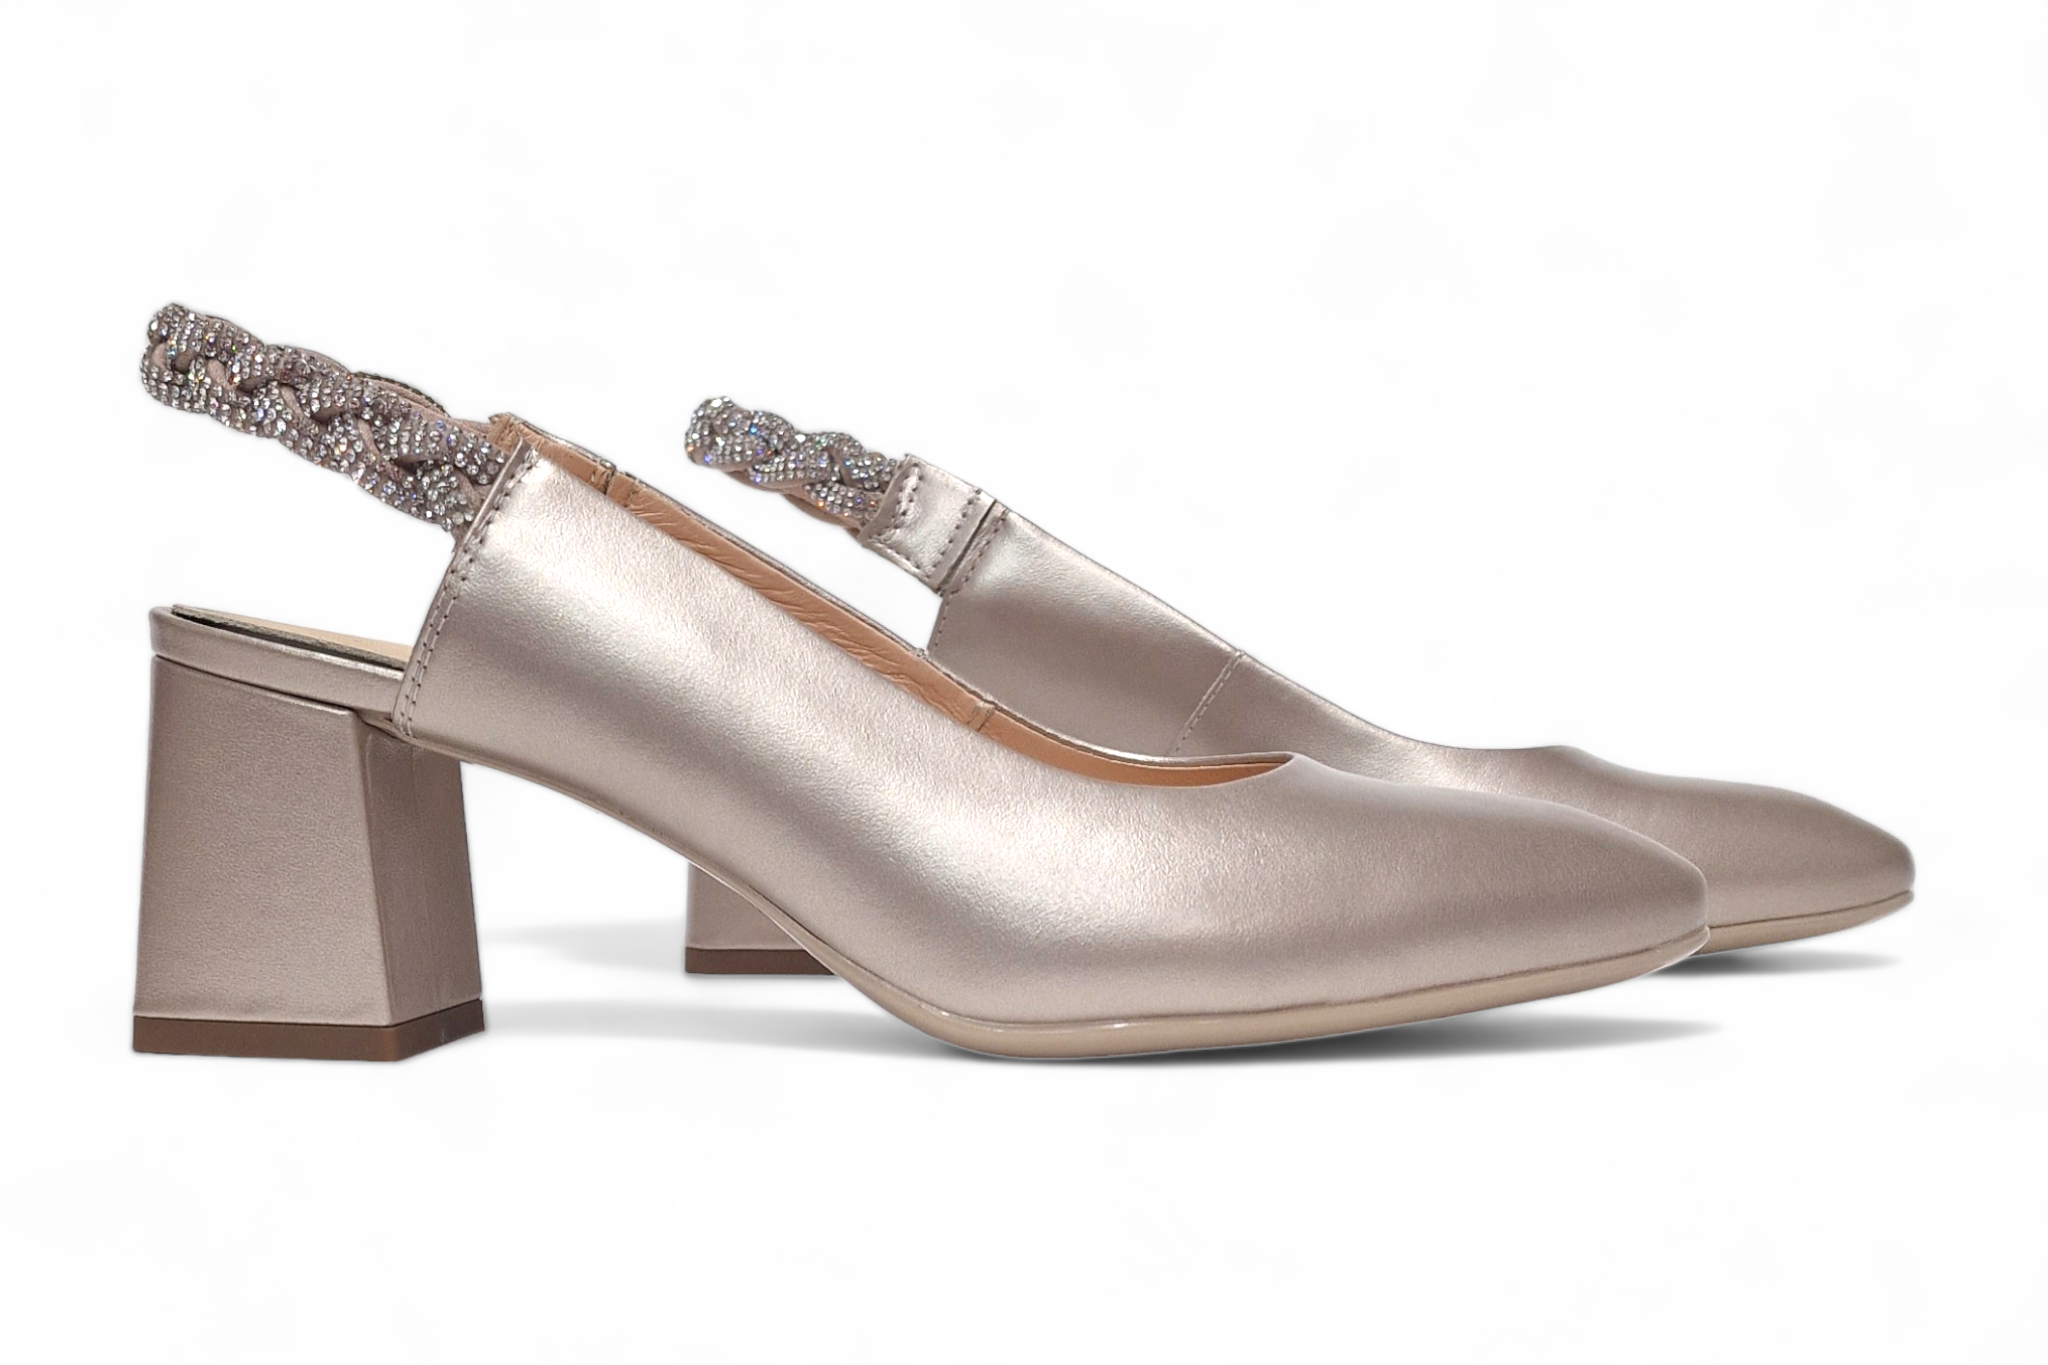 Pantofi dama eleganti piele naturala SALA dec 9977 auriu